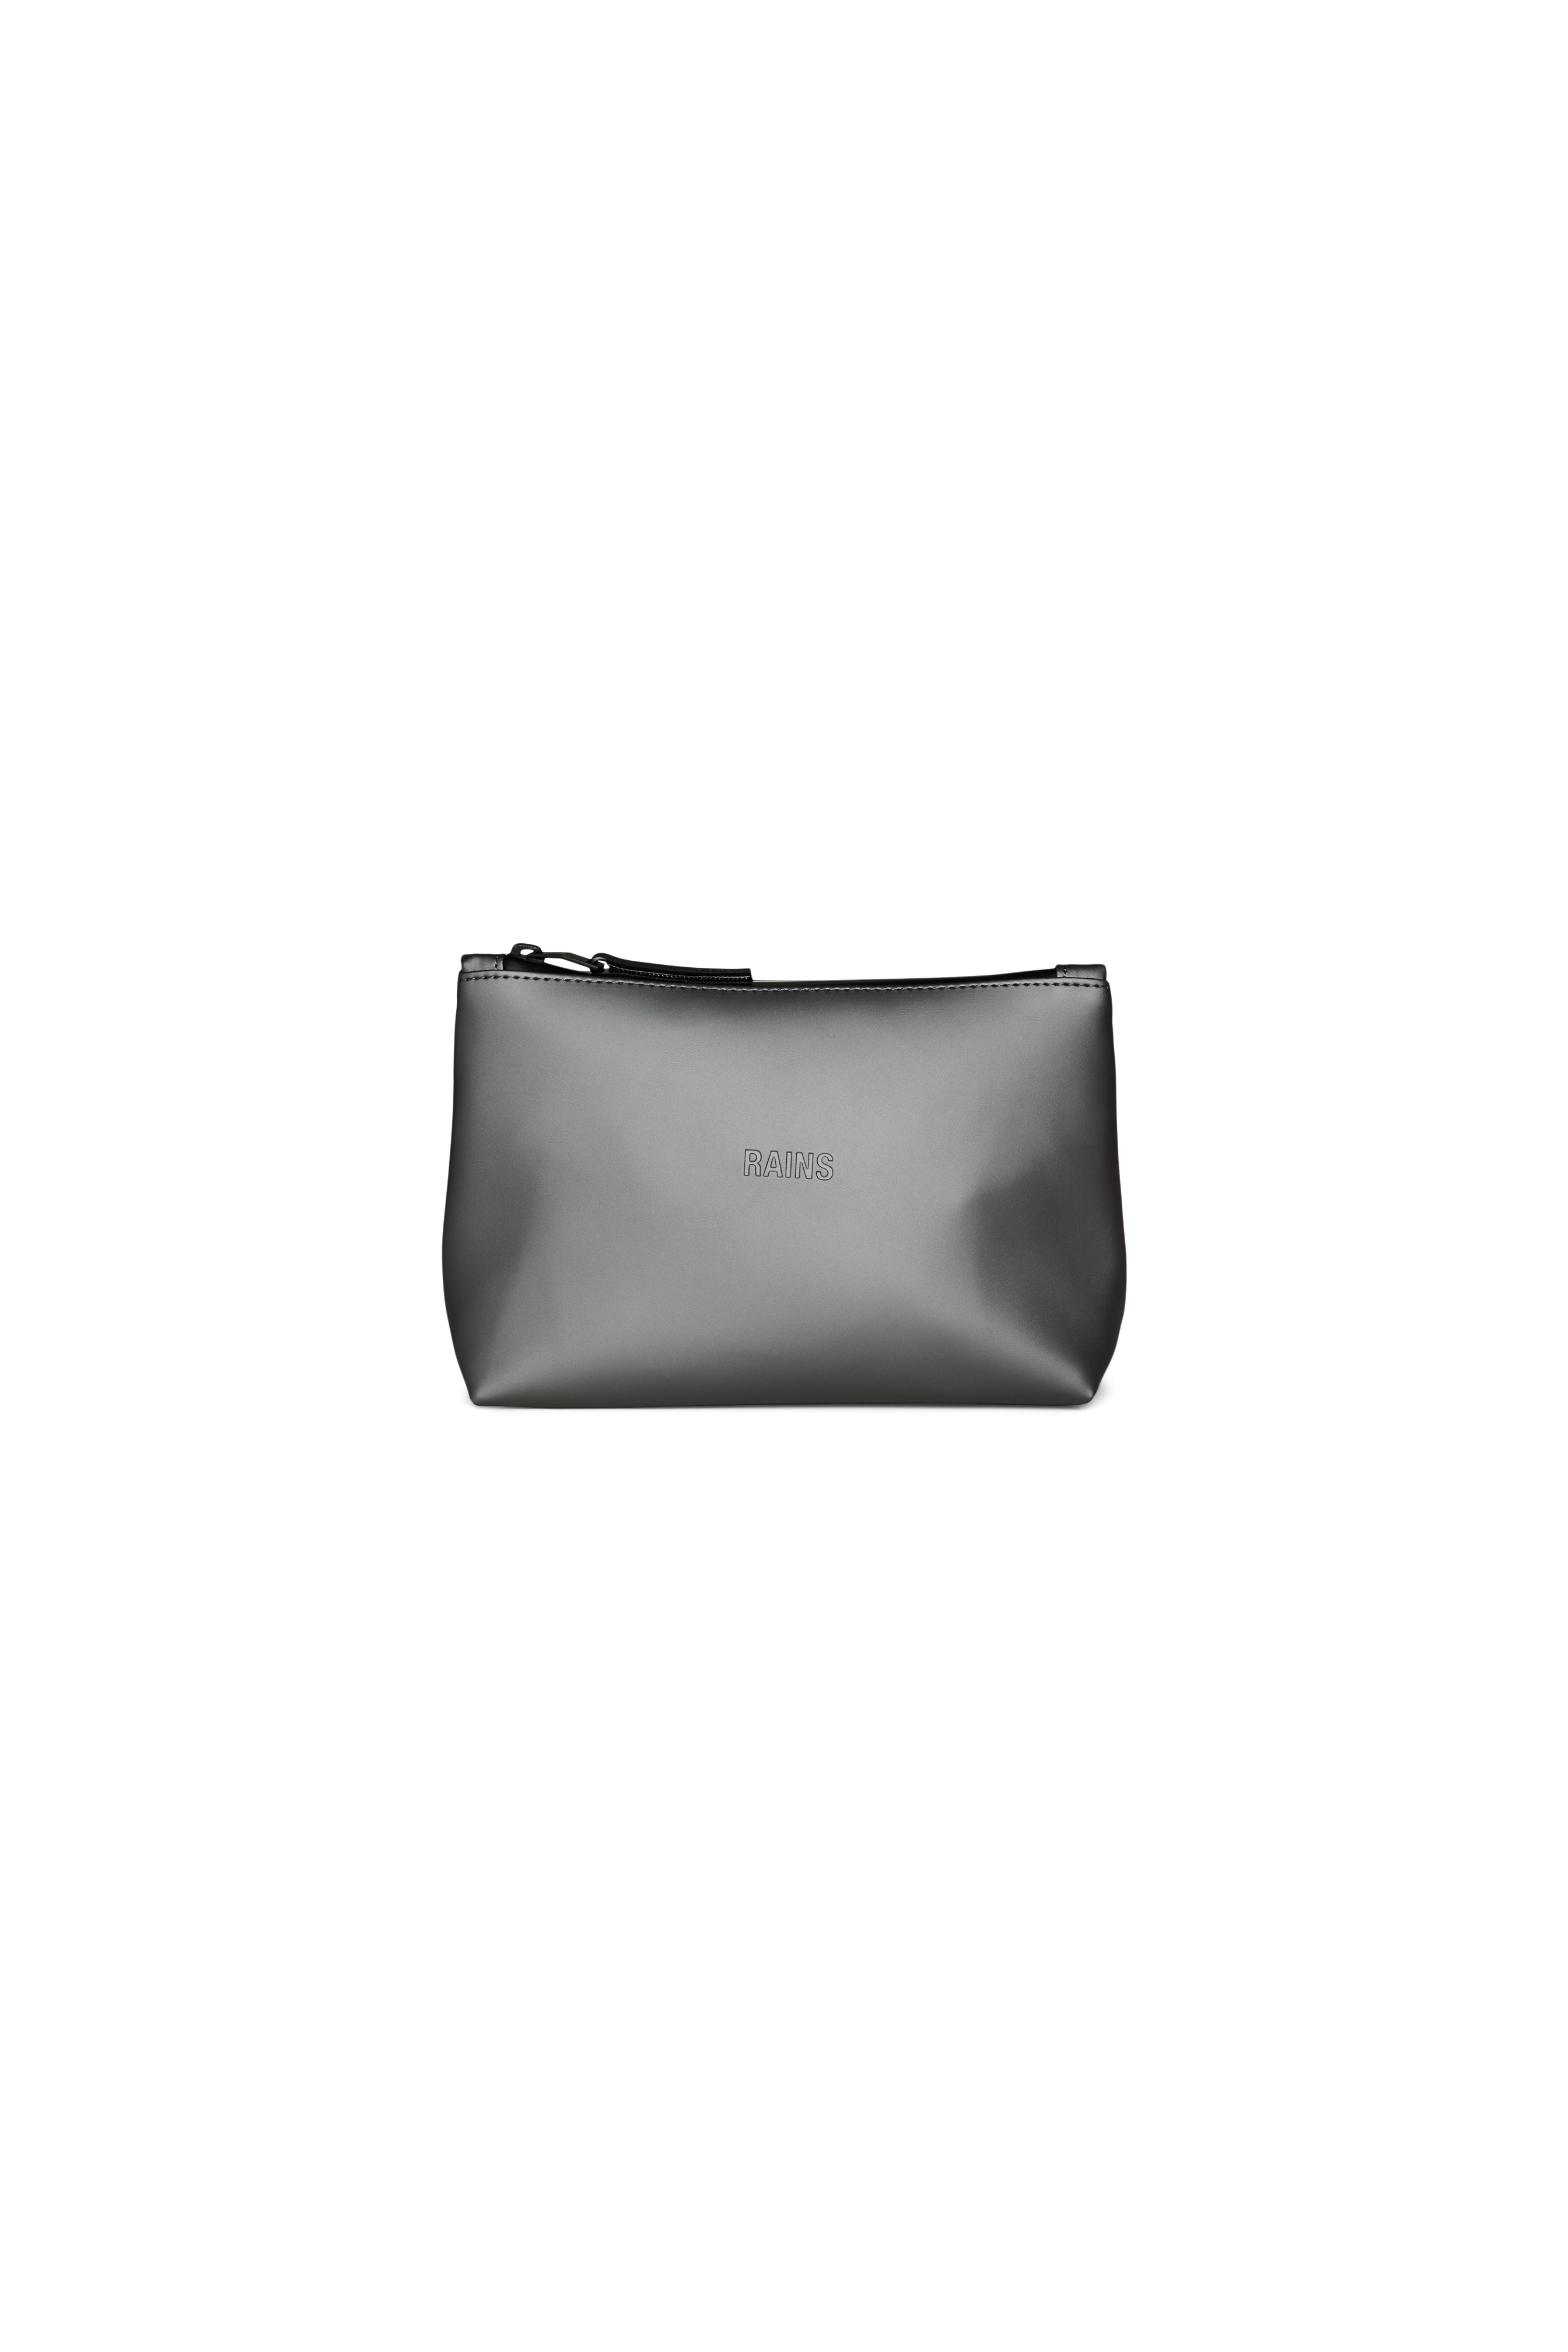 Rains® Cosmetic Bag in Metallic Grey for $50 | 2-Year Warranty